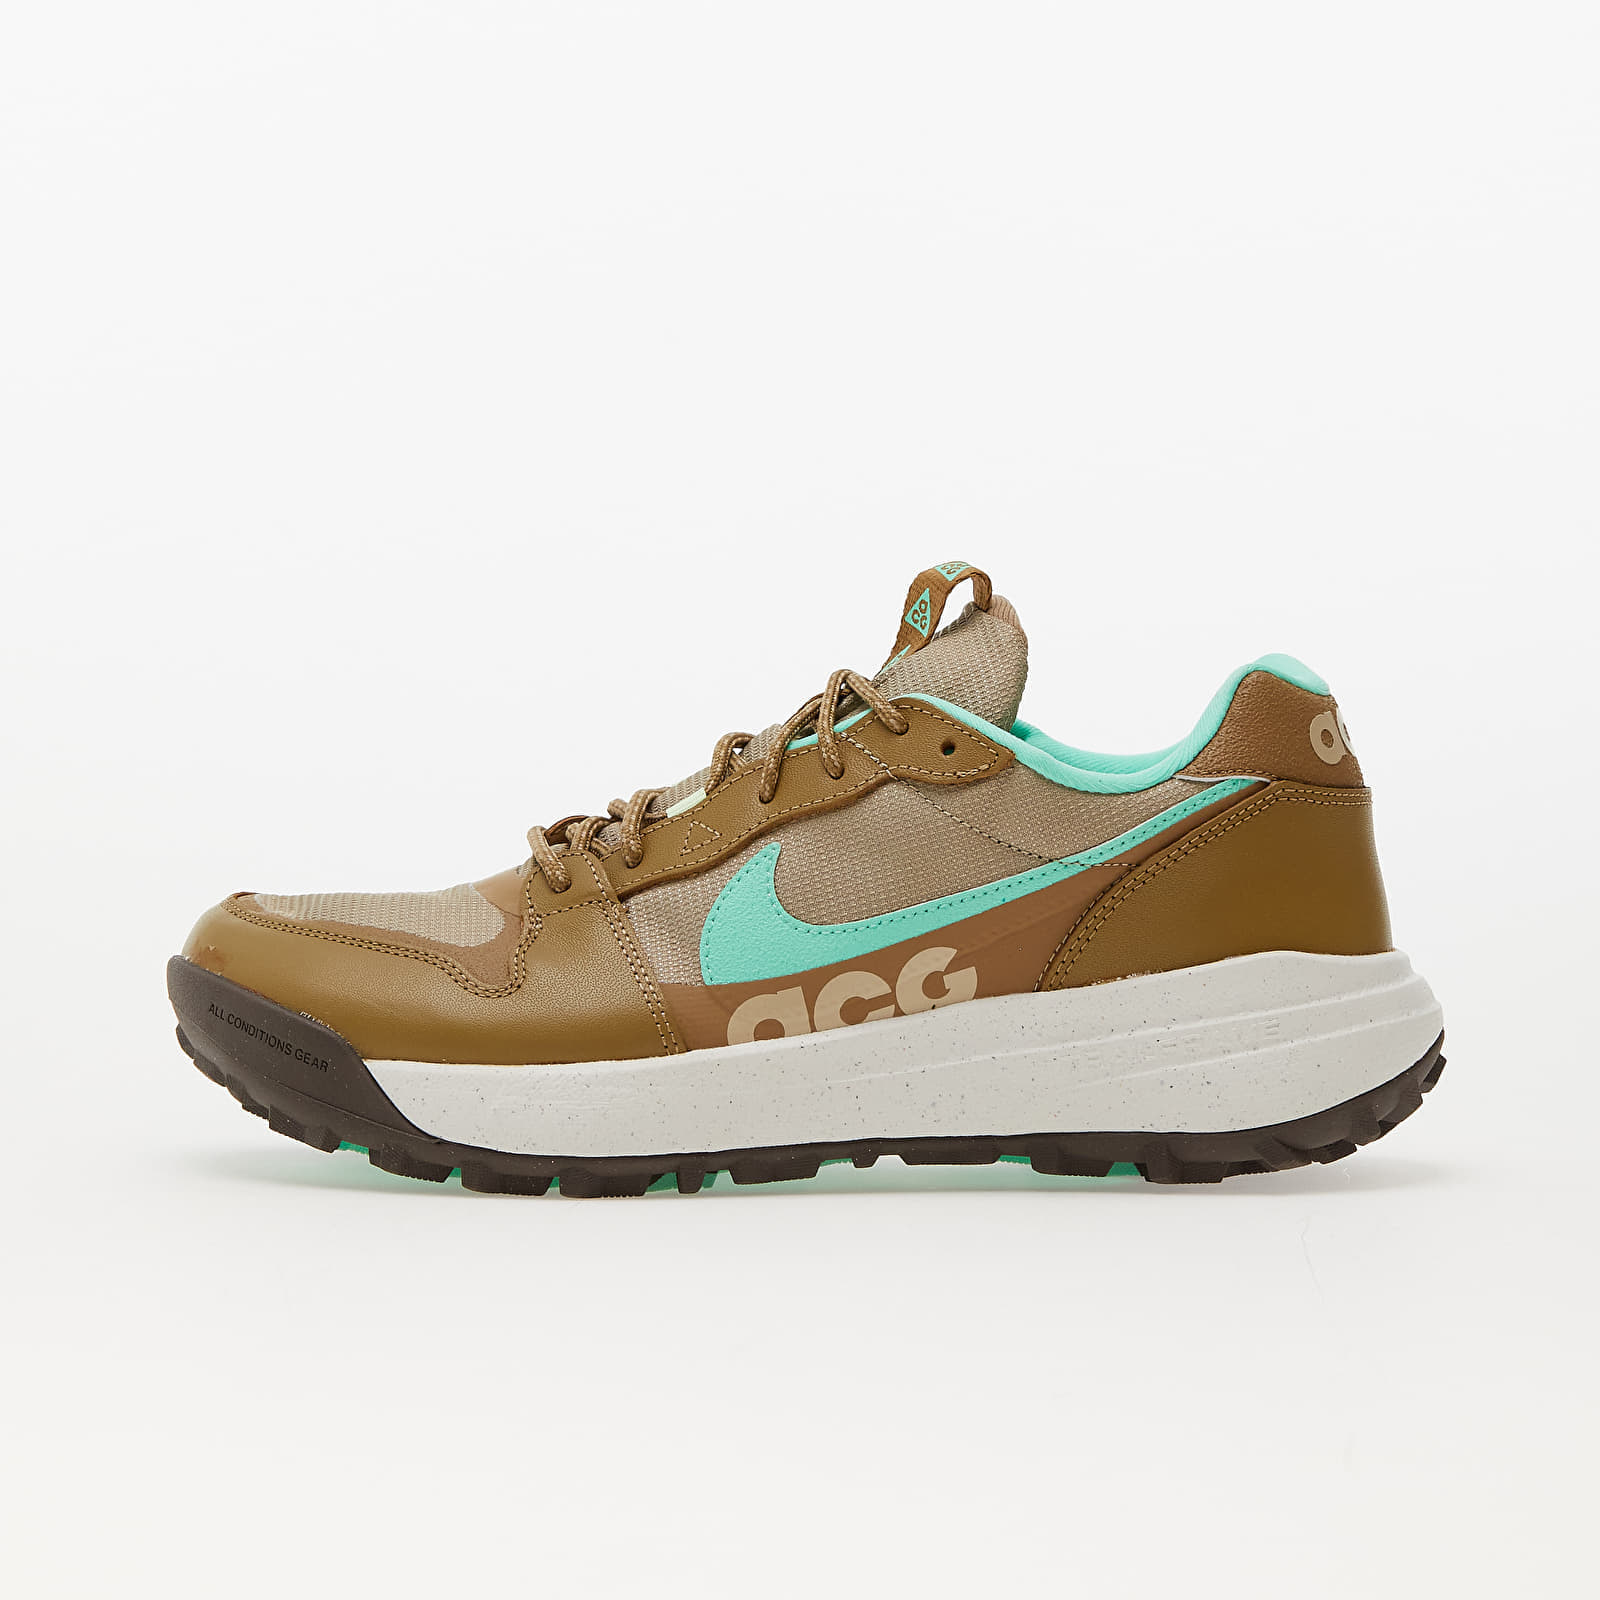 Turnschuhe und Schuhe für Männer Nike ACG Lowcate Limestone/ Green Glow-Dk Driftwood-Sail